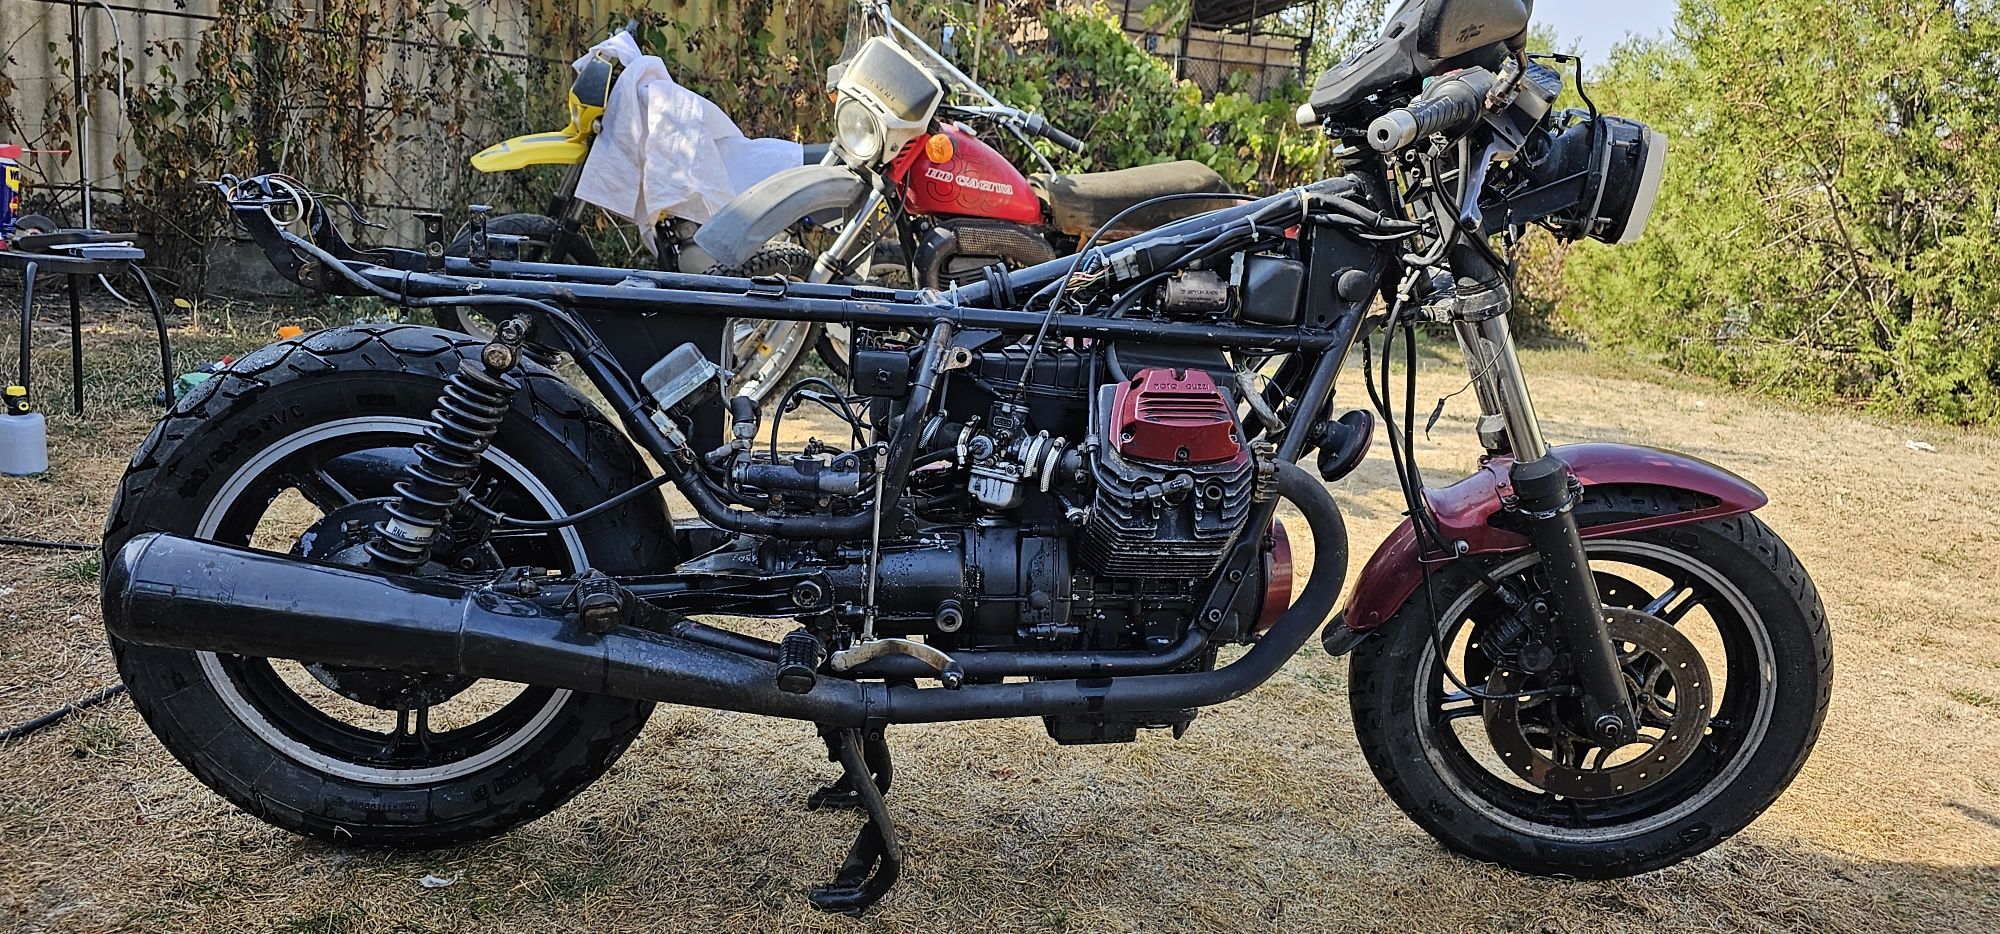 Moto Guzzi V65 Lario 650cmc 60 cai cardan cafe racer înmatriculată